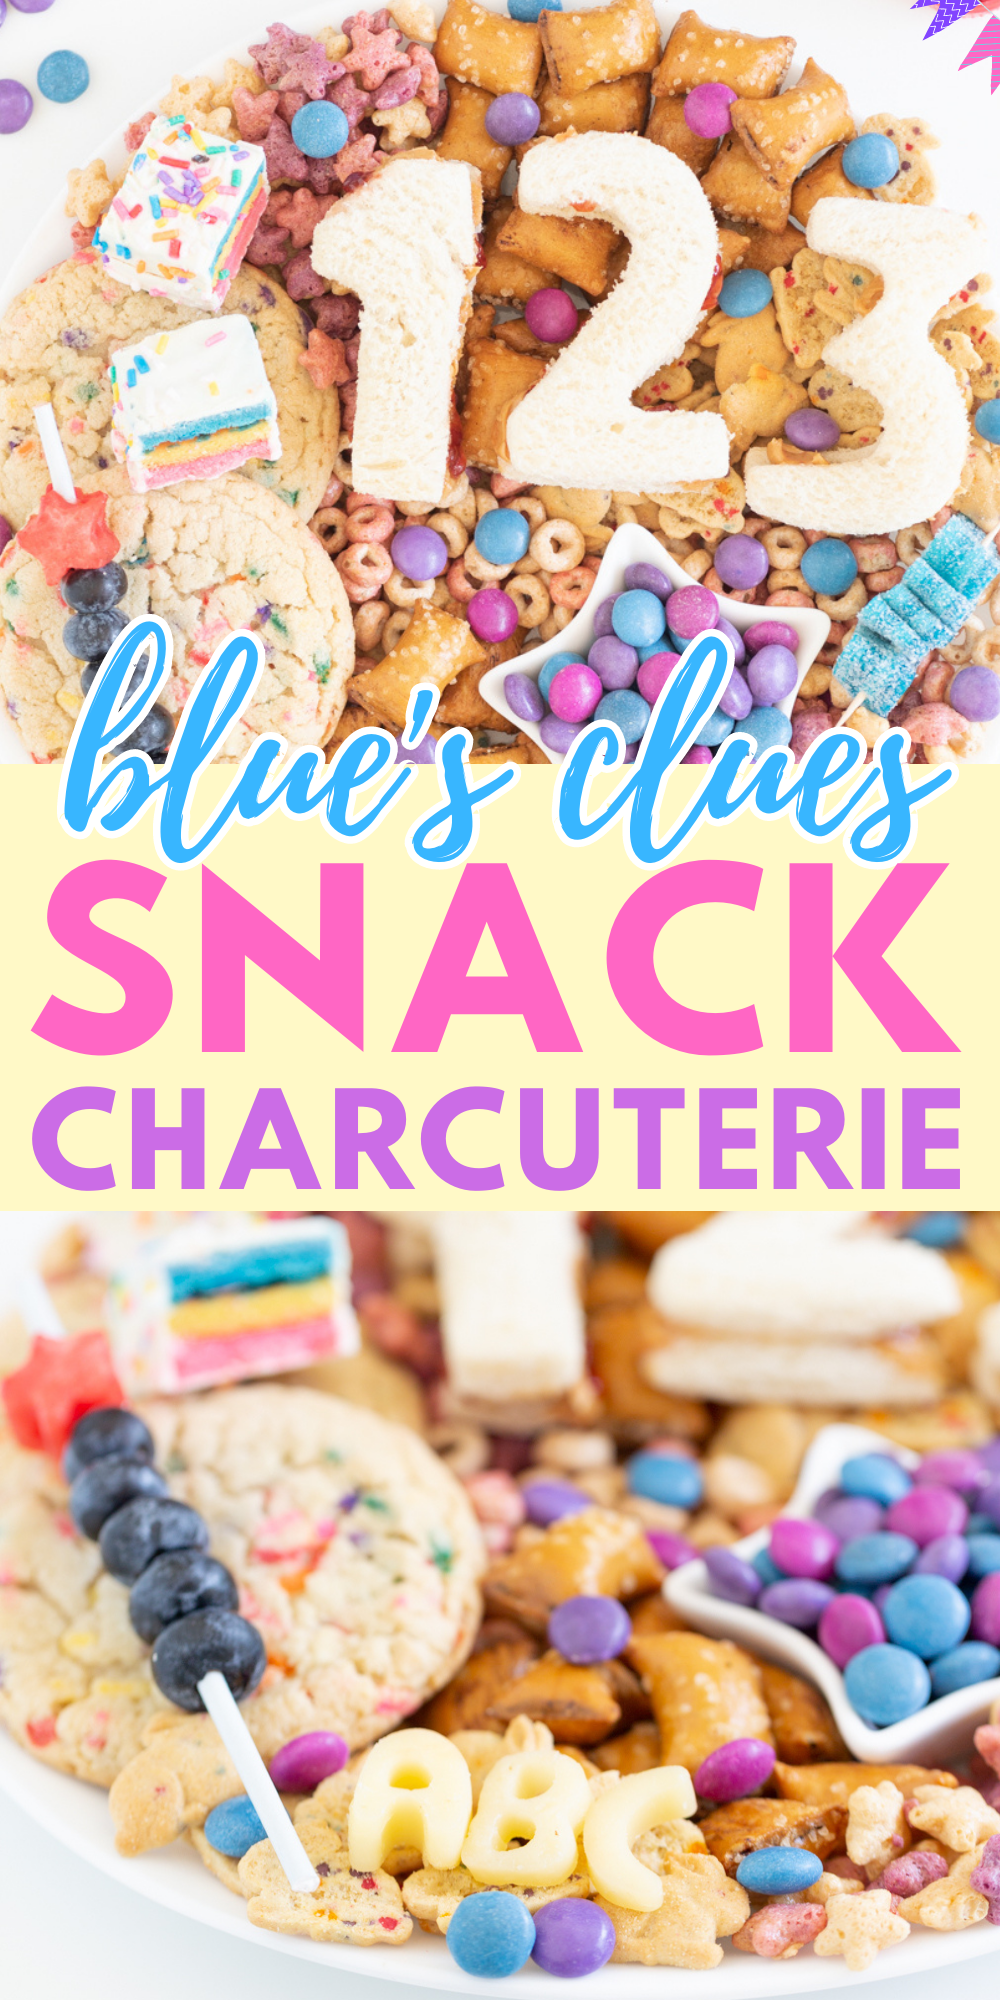 Blue's Clues Snack Charcuterie